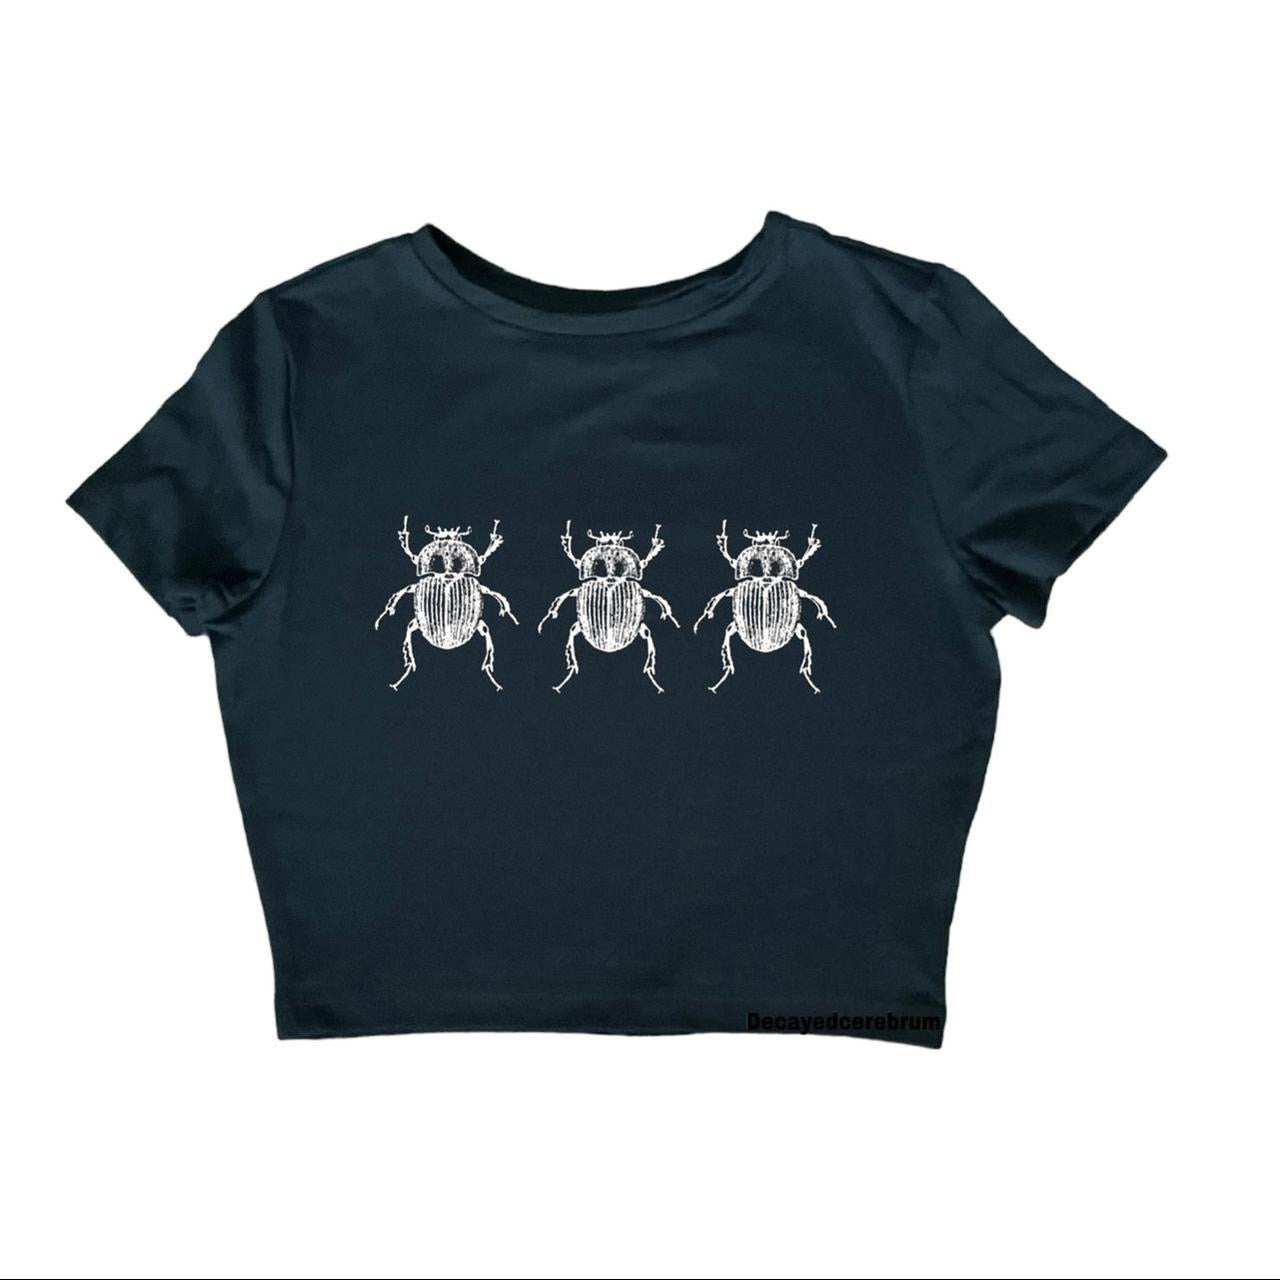 Beetle cropped baby tee